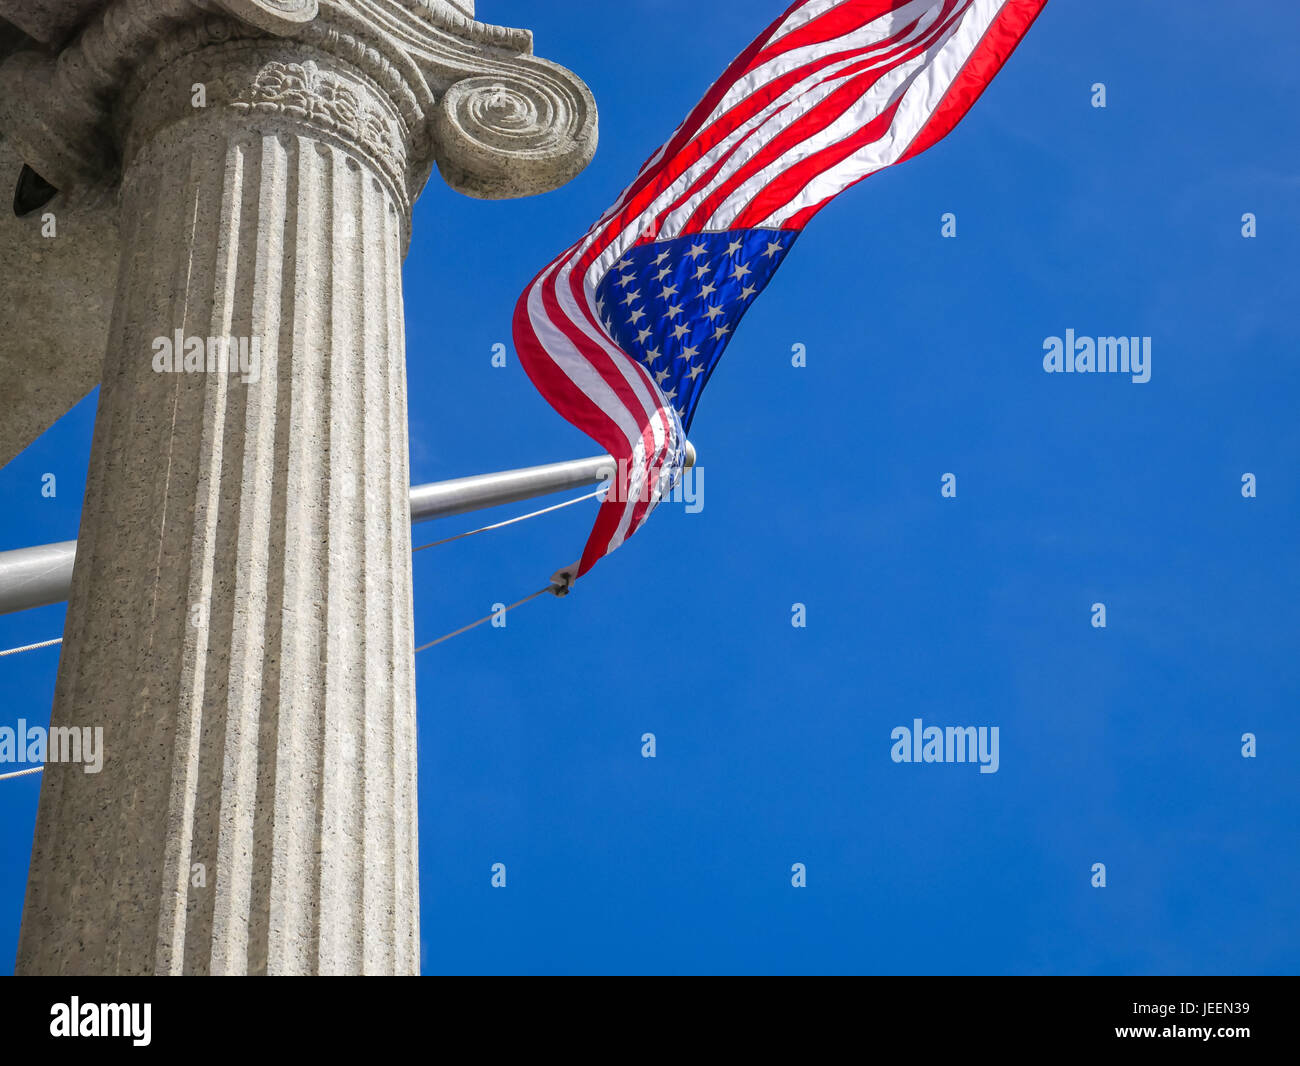 Cerca de bandera americana ondeando contra el cielo azul, el Bunker hill Monument, Charlestown, Boston, Massachusetts, EE.UU. Foto de stock